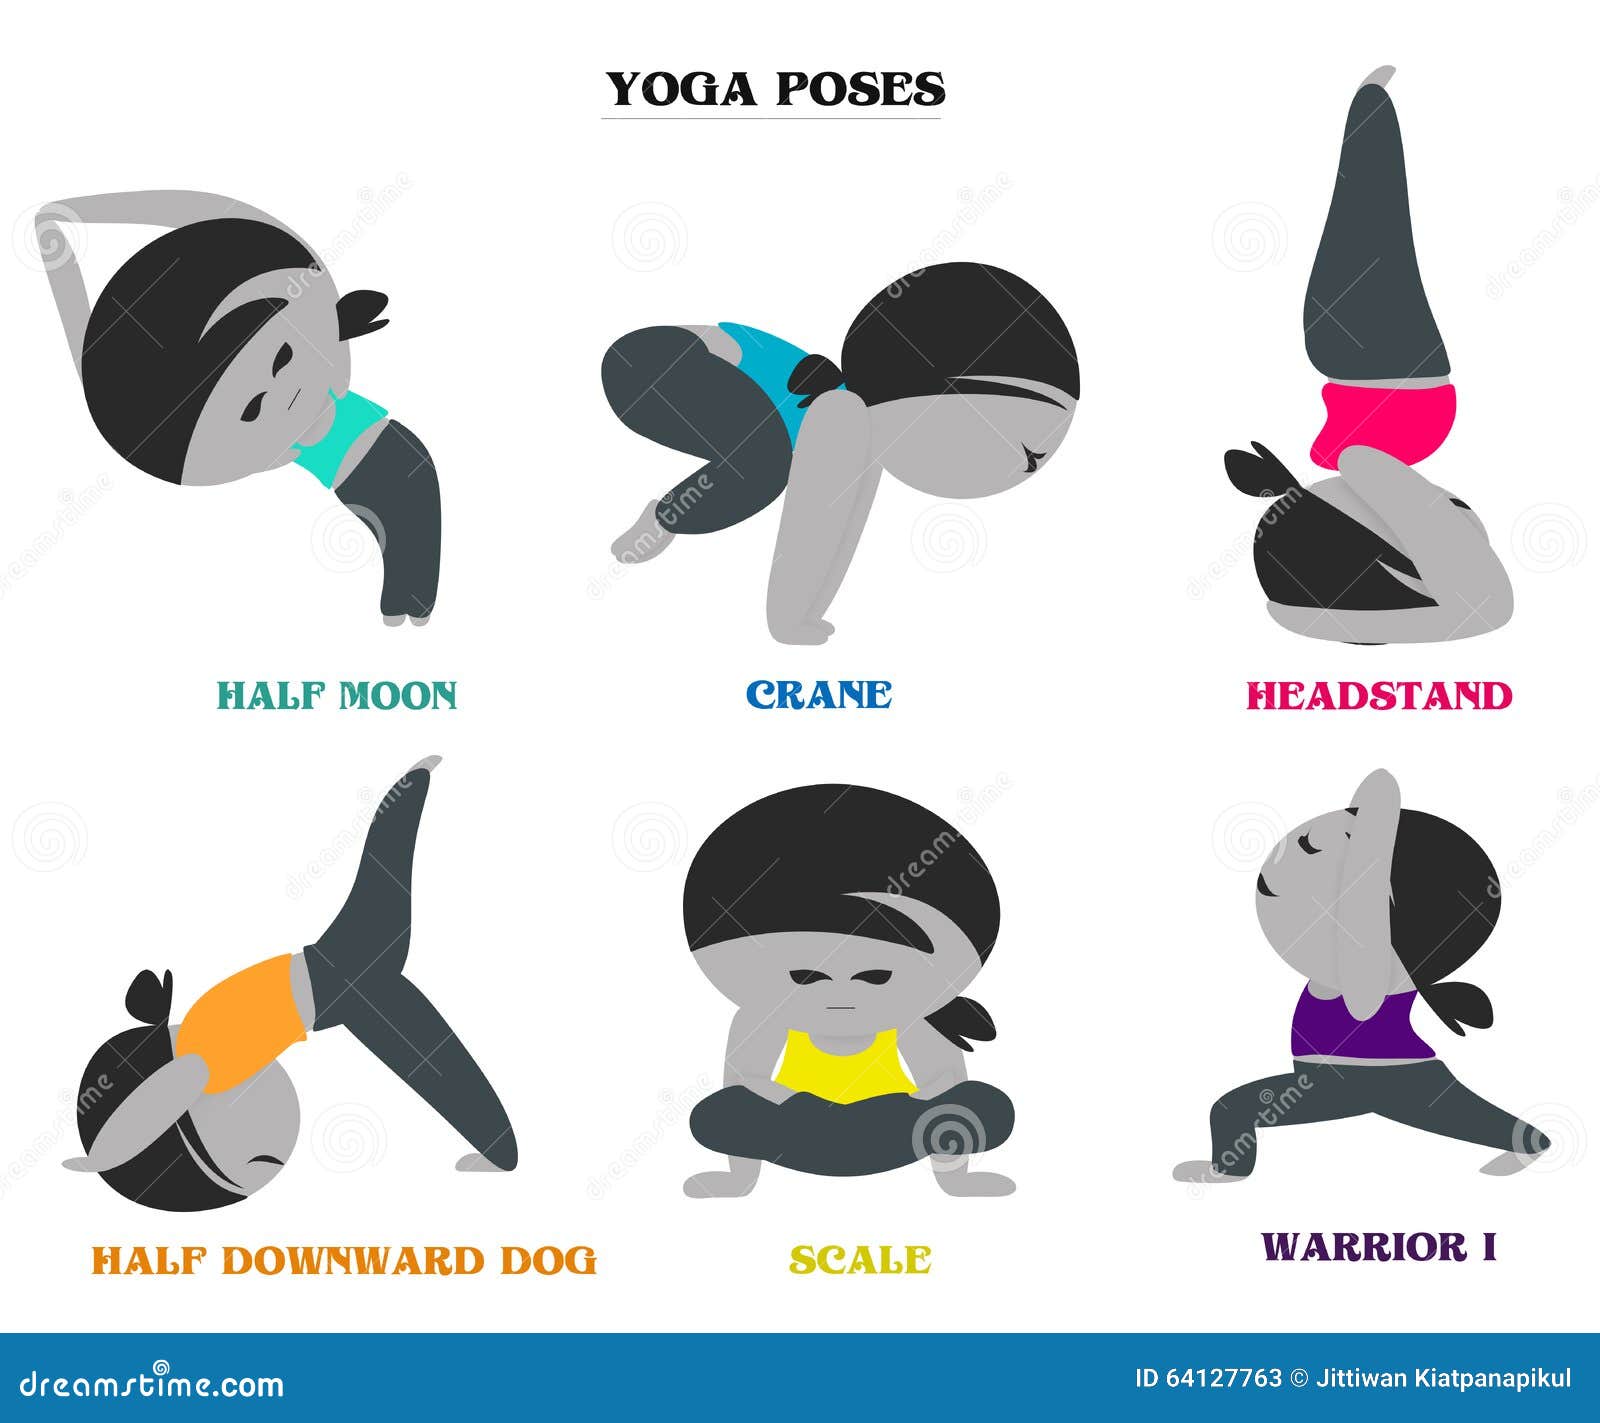 Yoga Poses And Names Cartoon Background Stock Illustration - Image